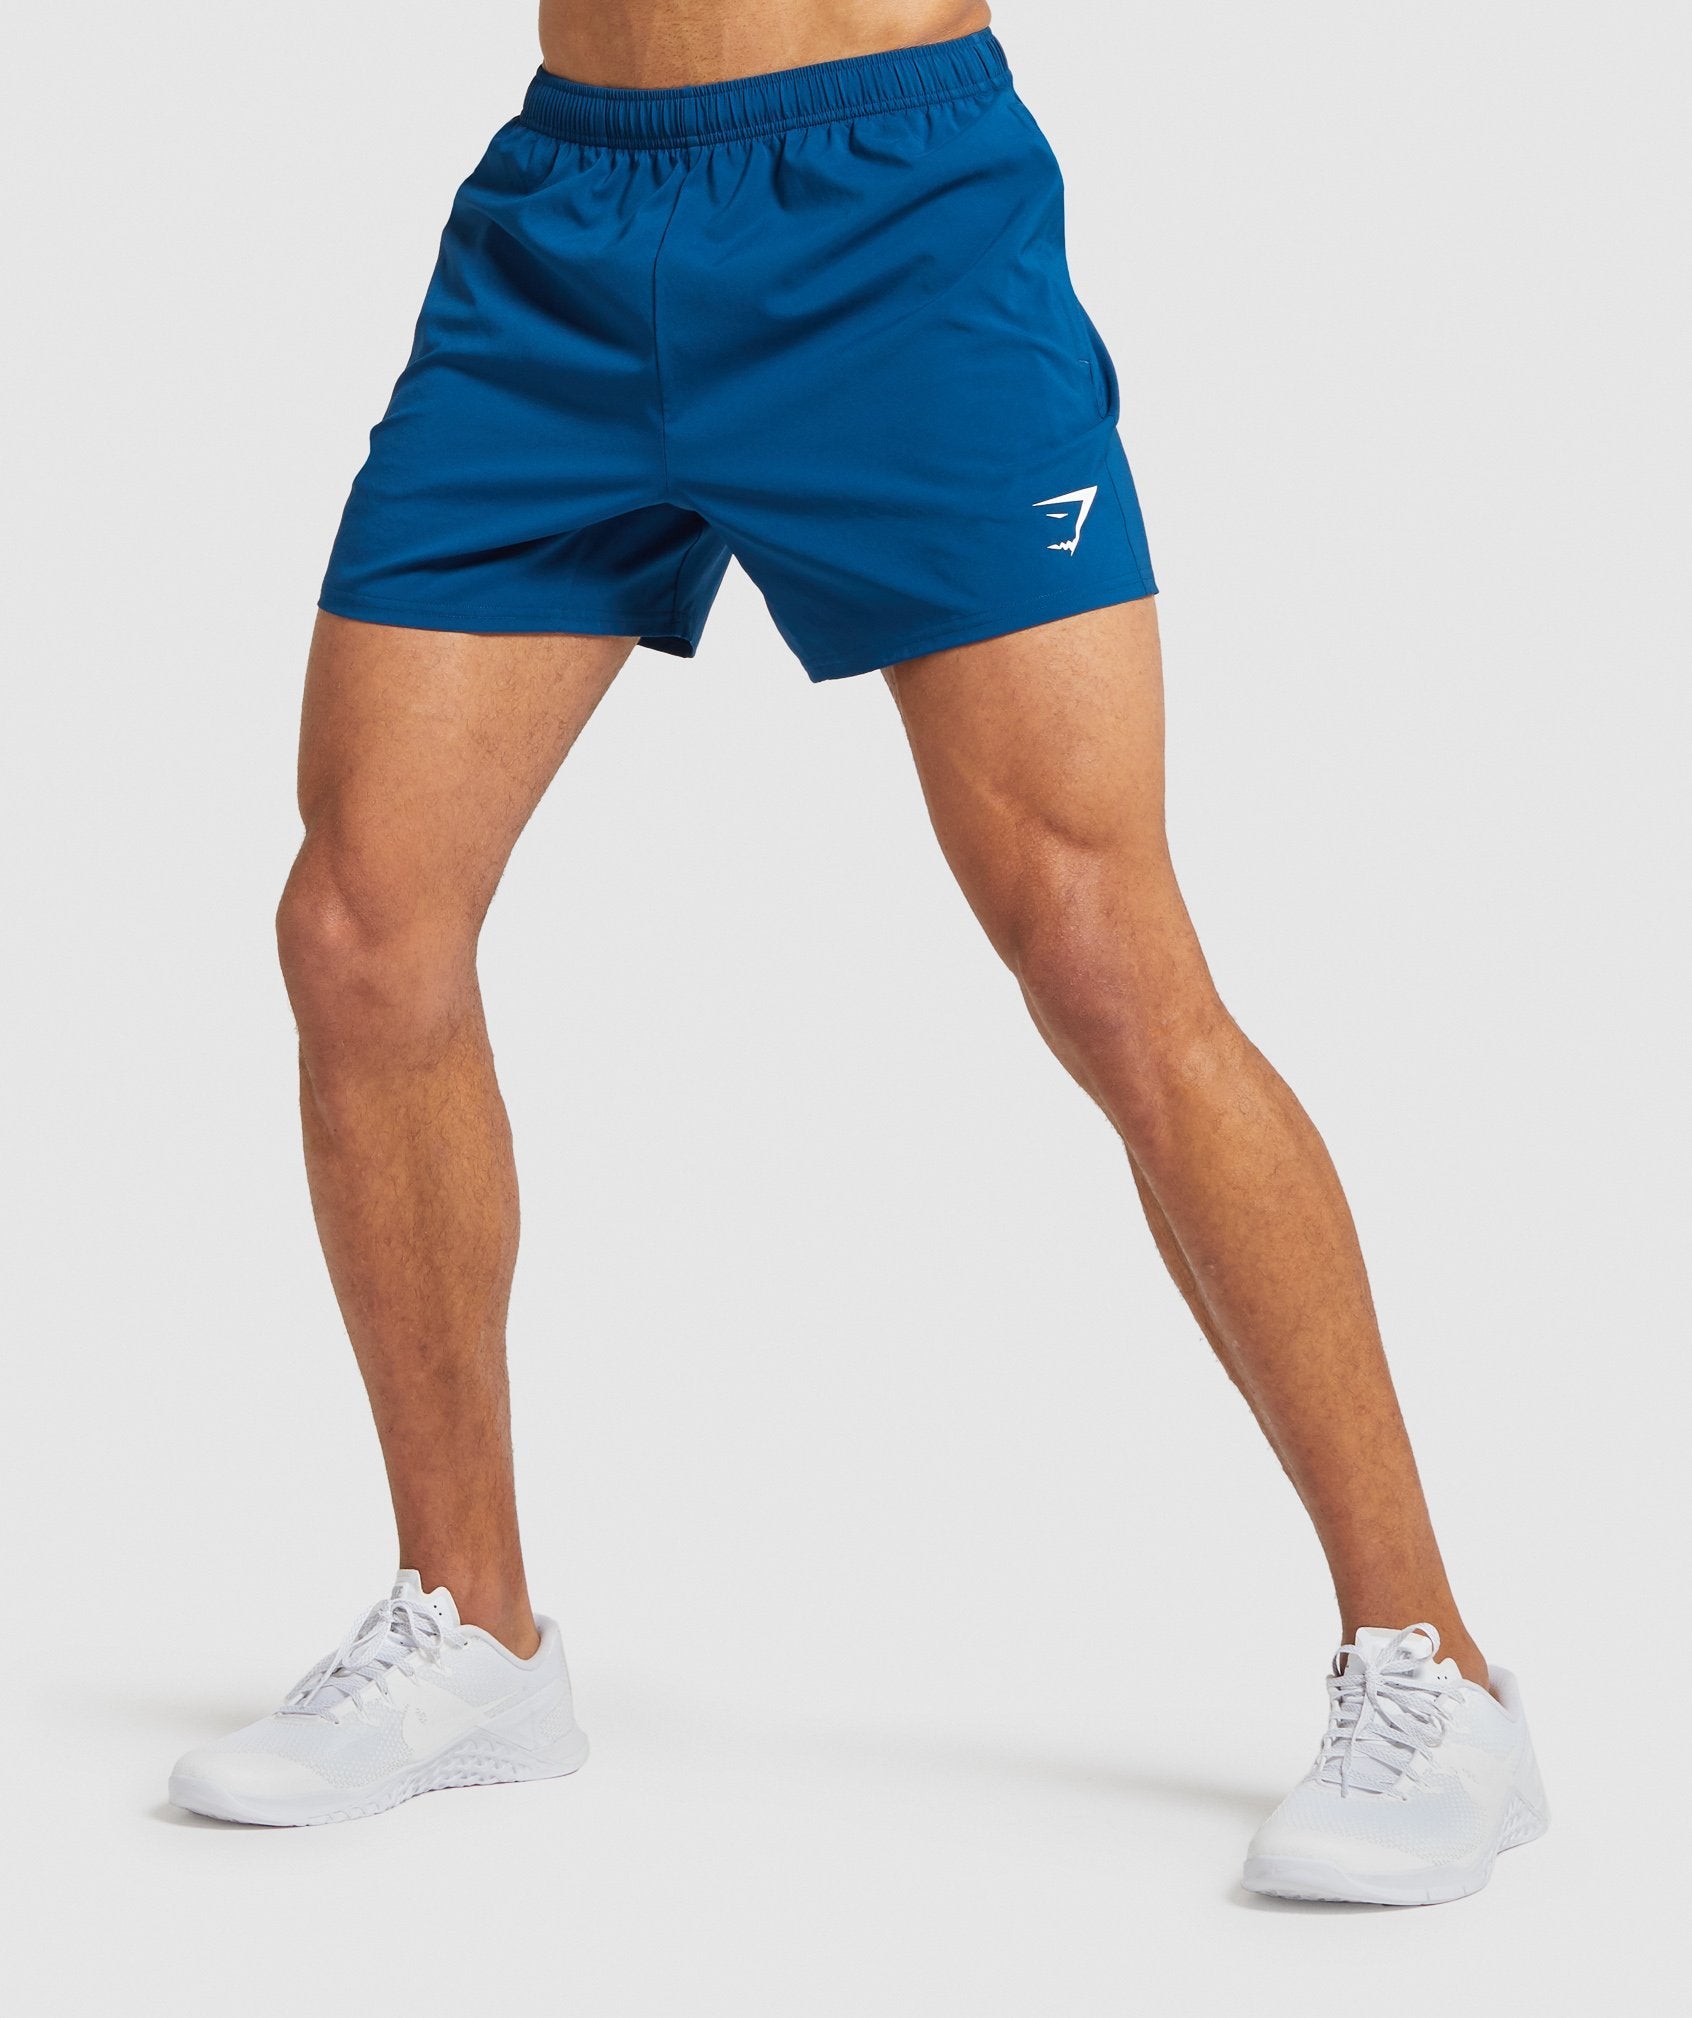 Men's fitness shorts 